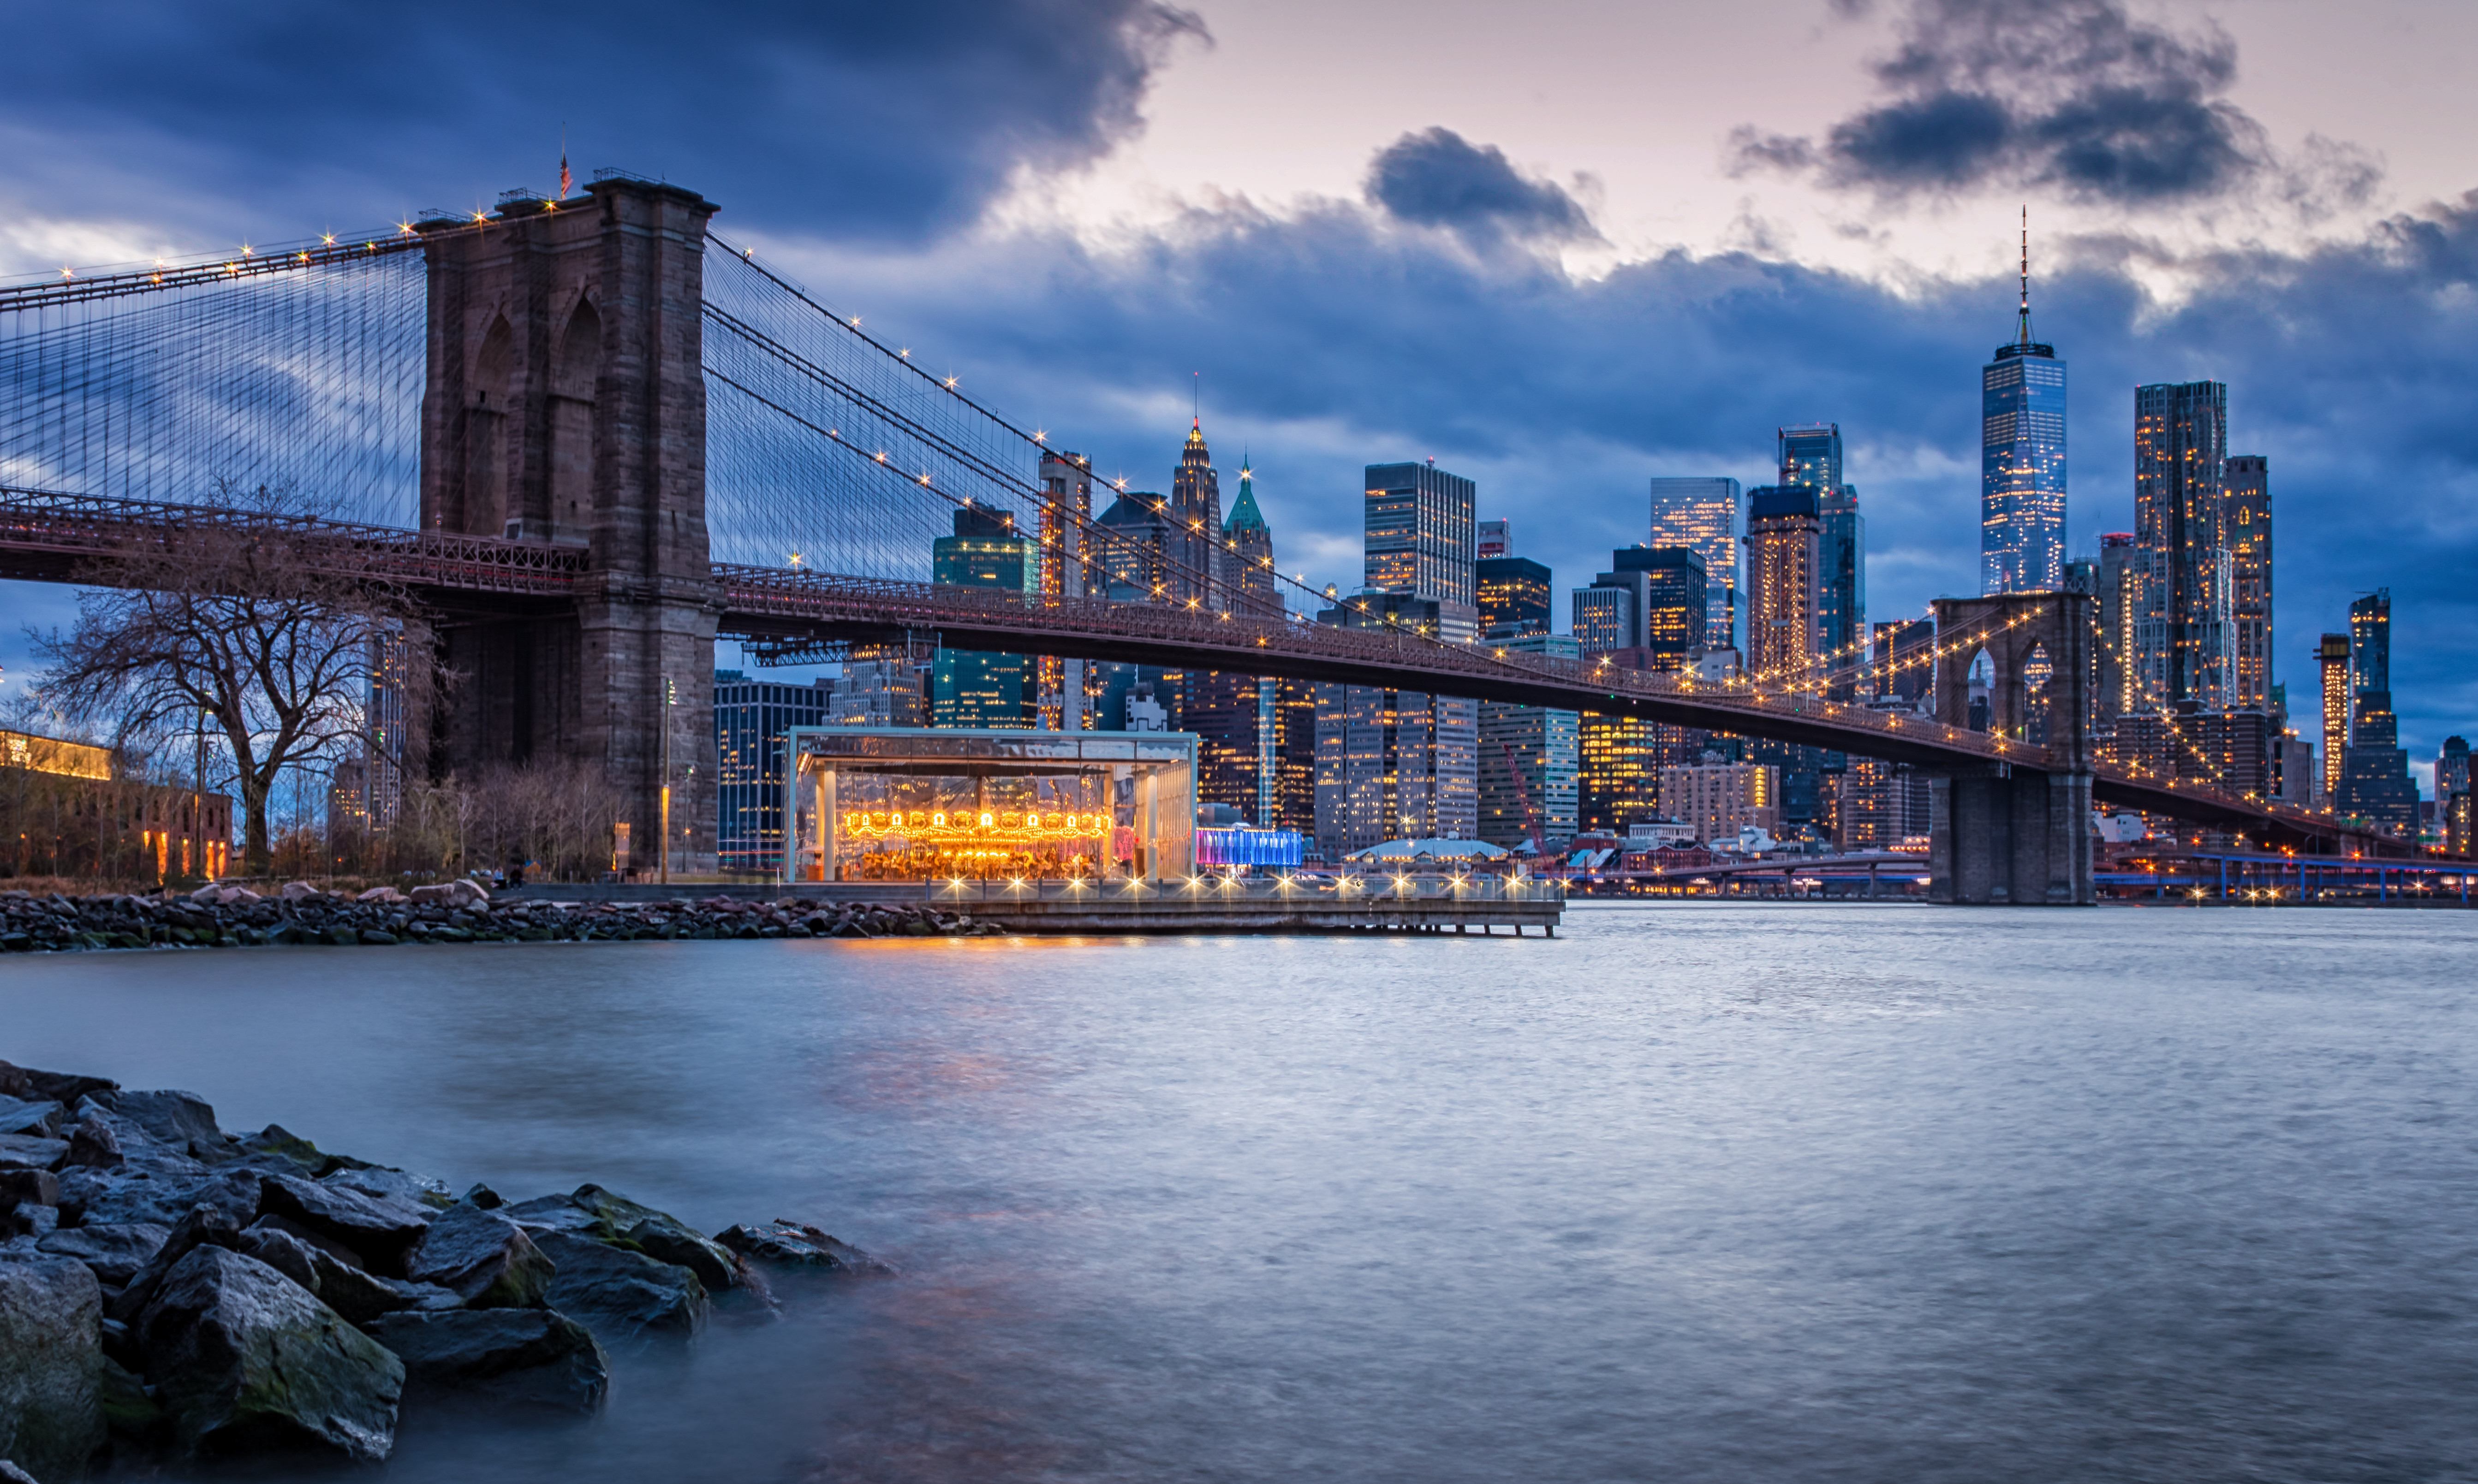 The Evening Bridge in New York